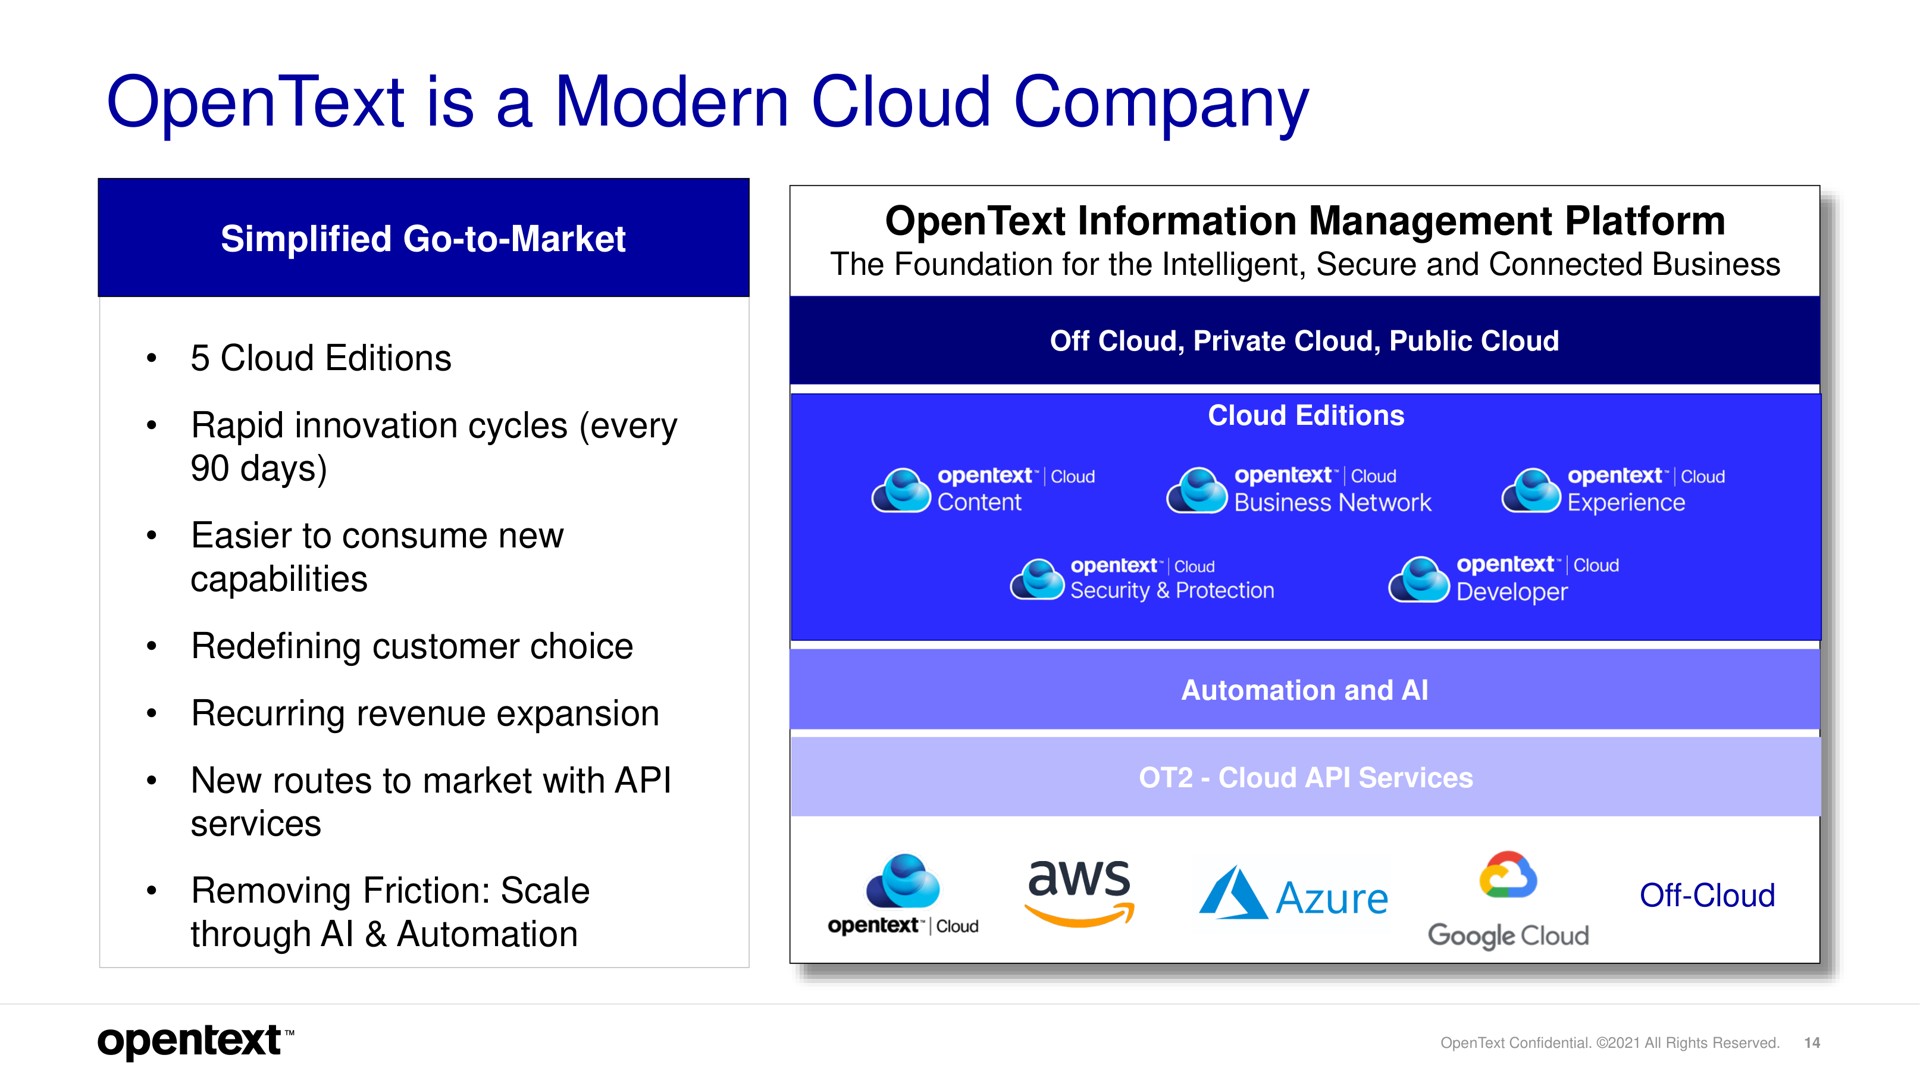 is a modern cloud company | OpenText